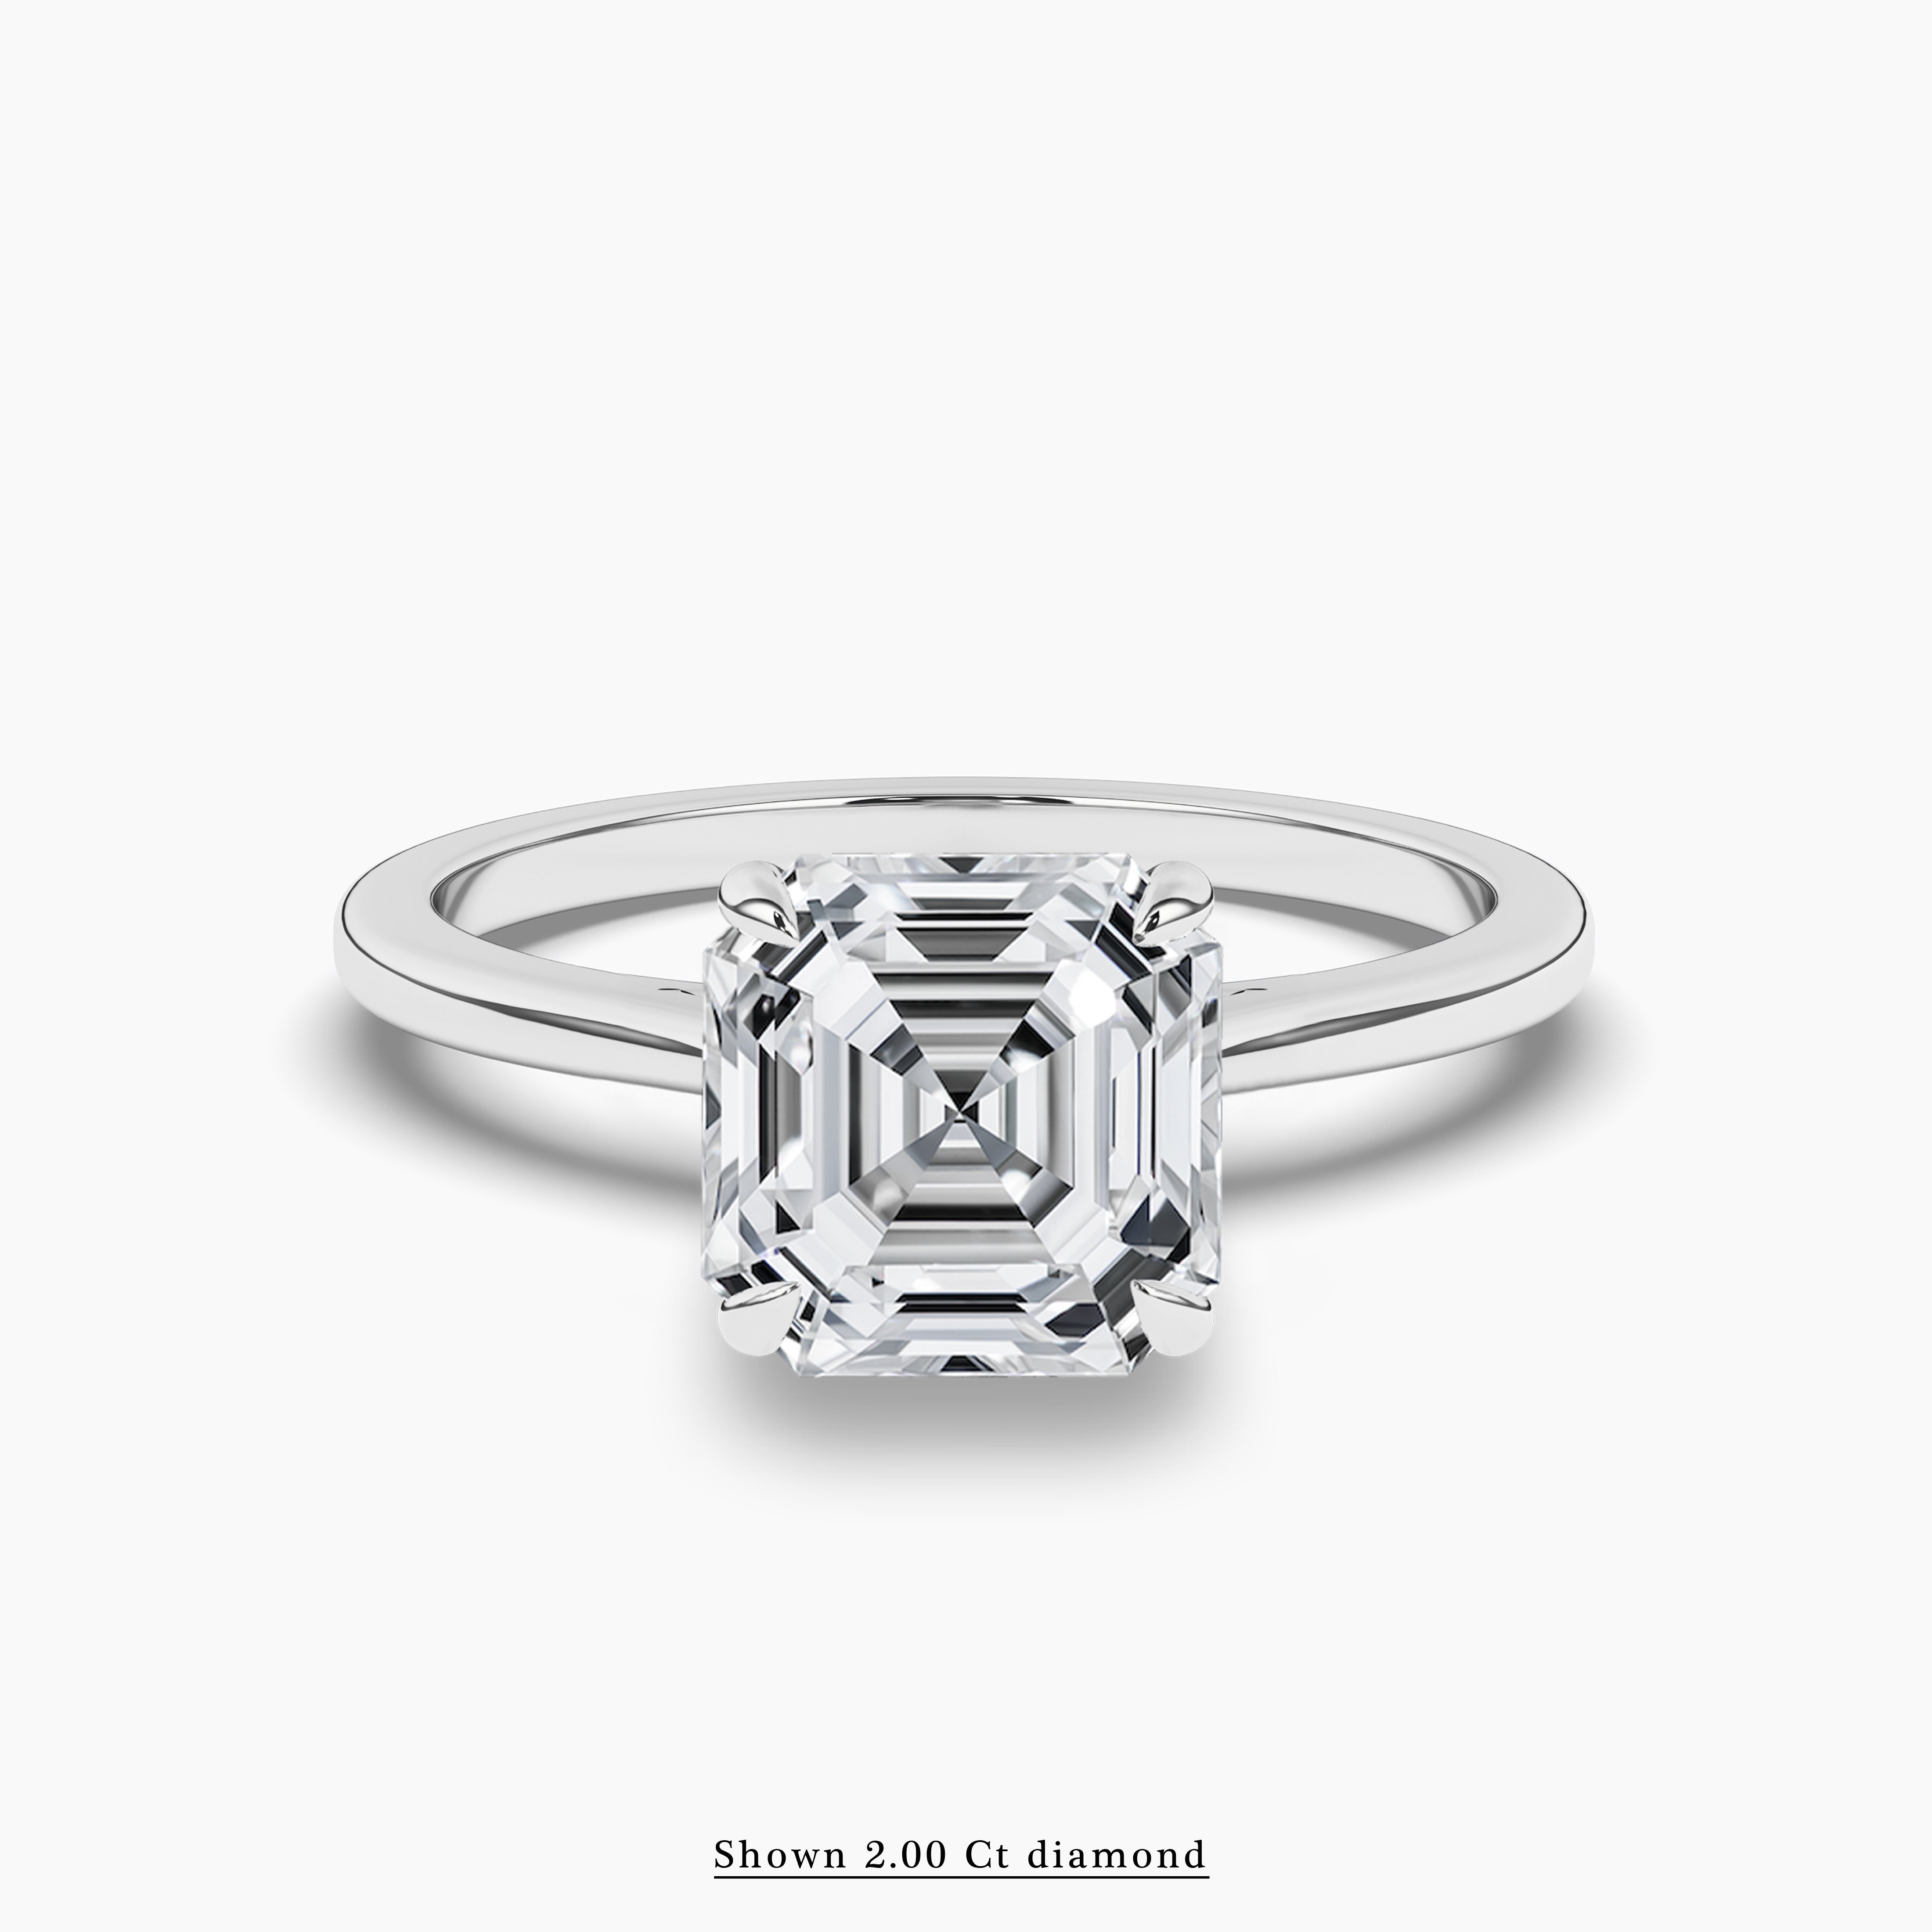 Asscher-Cut Diamond Engagement Ring in White Gold